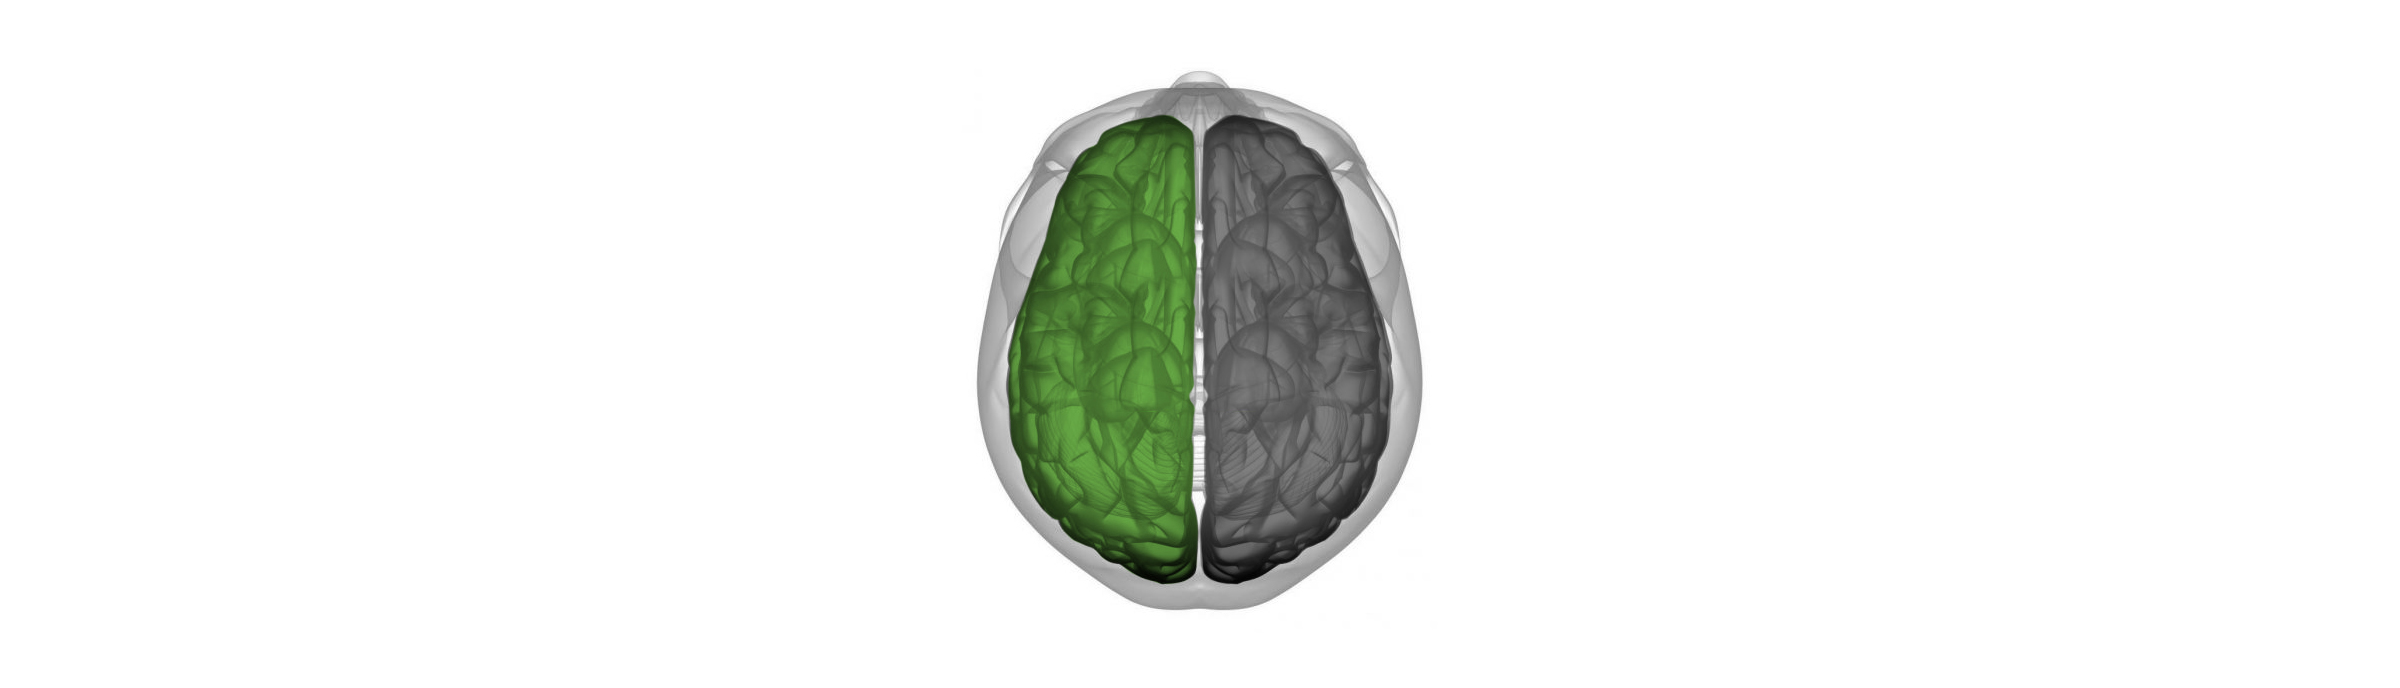 Brain 03b